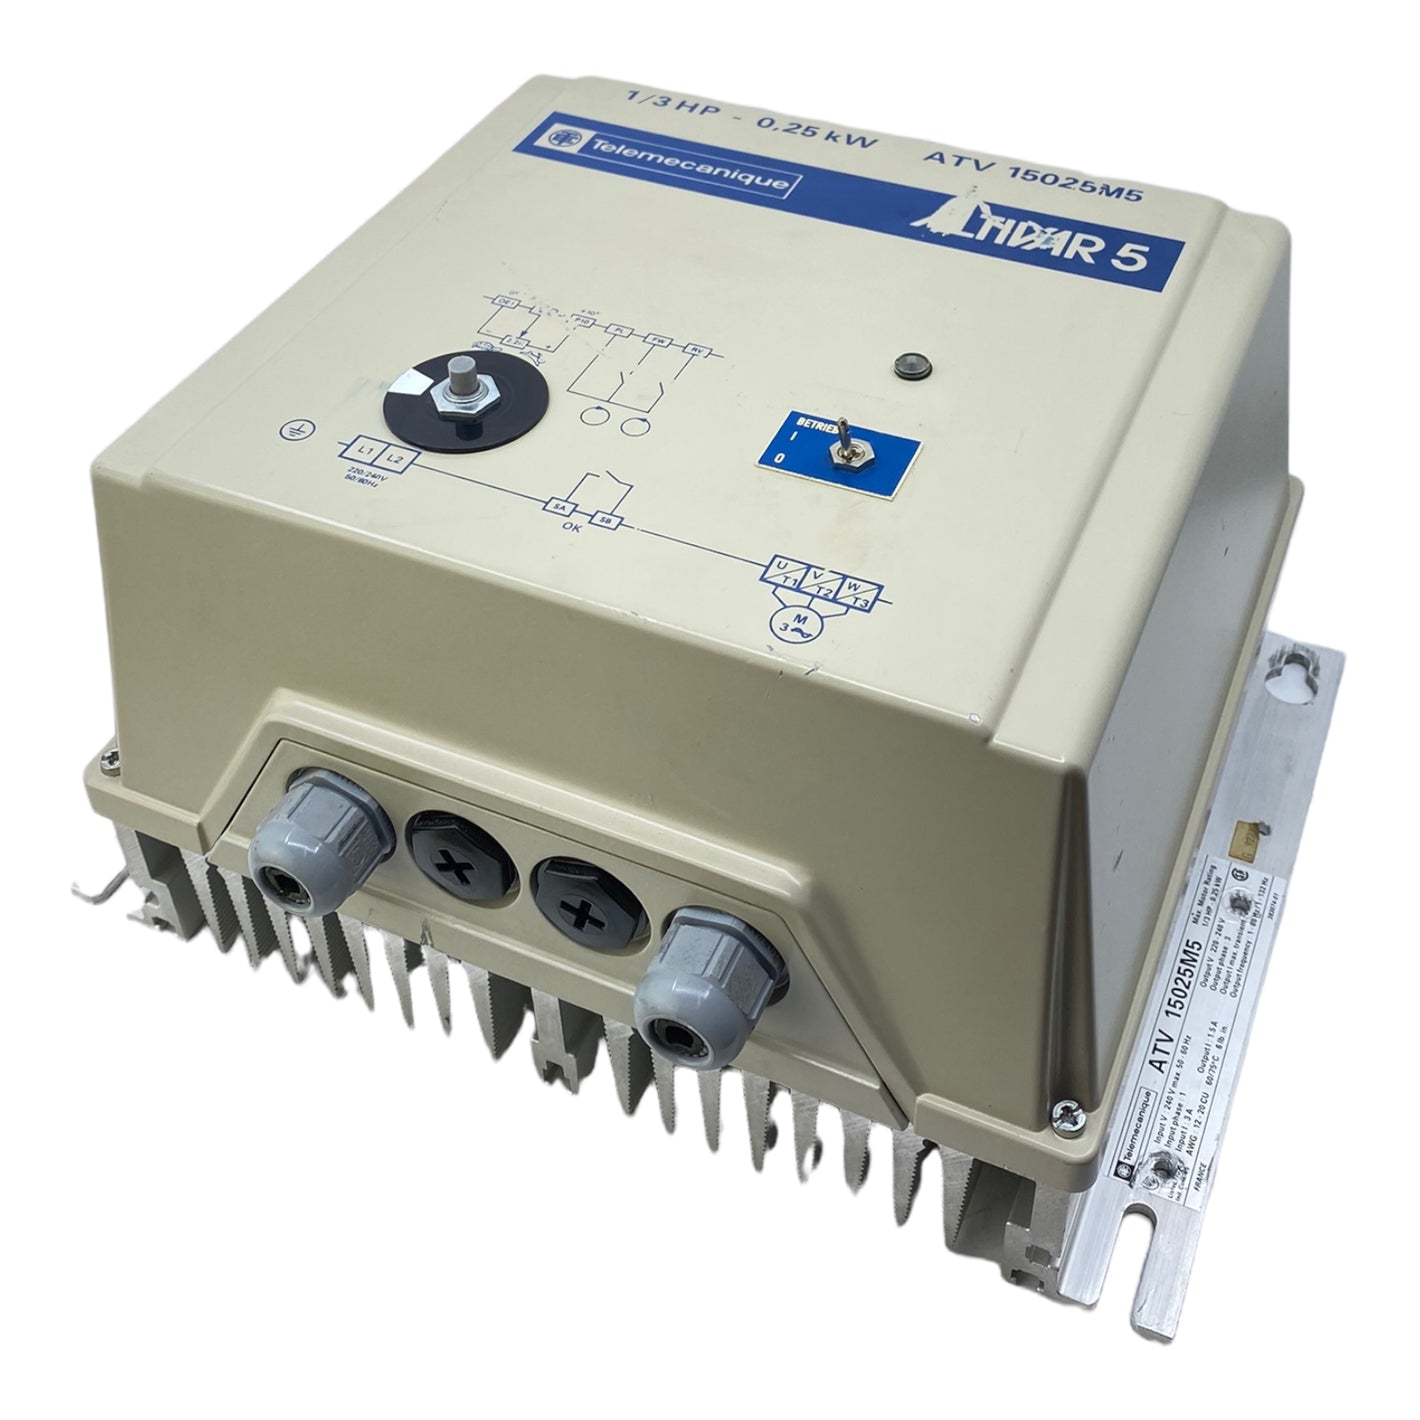 Telemecanique ATV15025M5 frequency converter 1/3 HP 0.25kW converter 